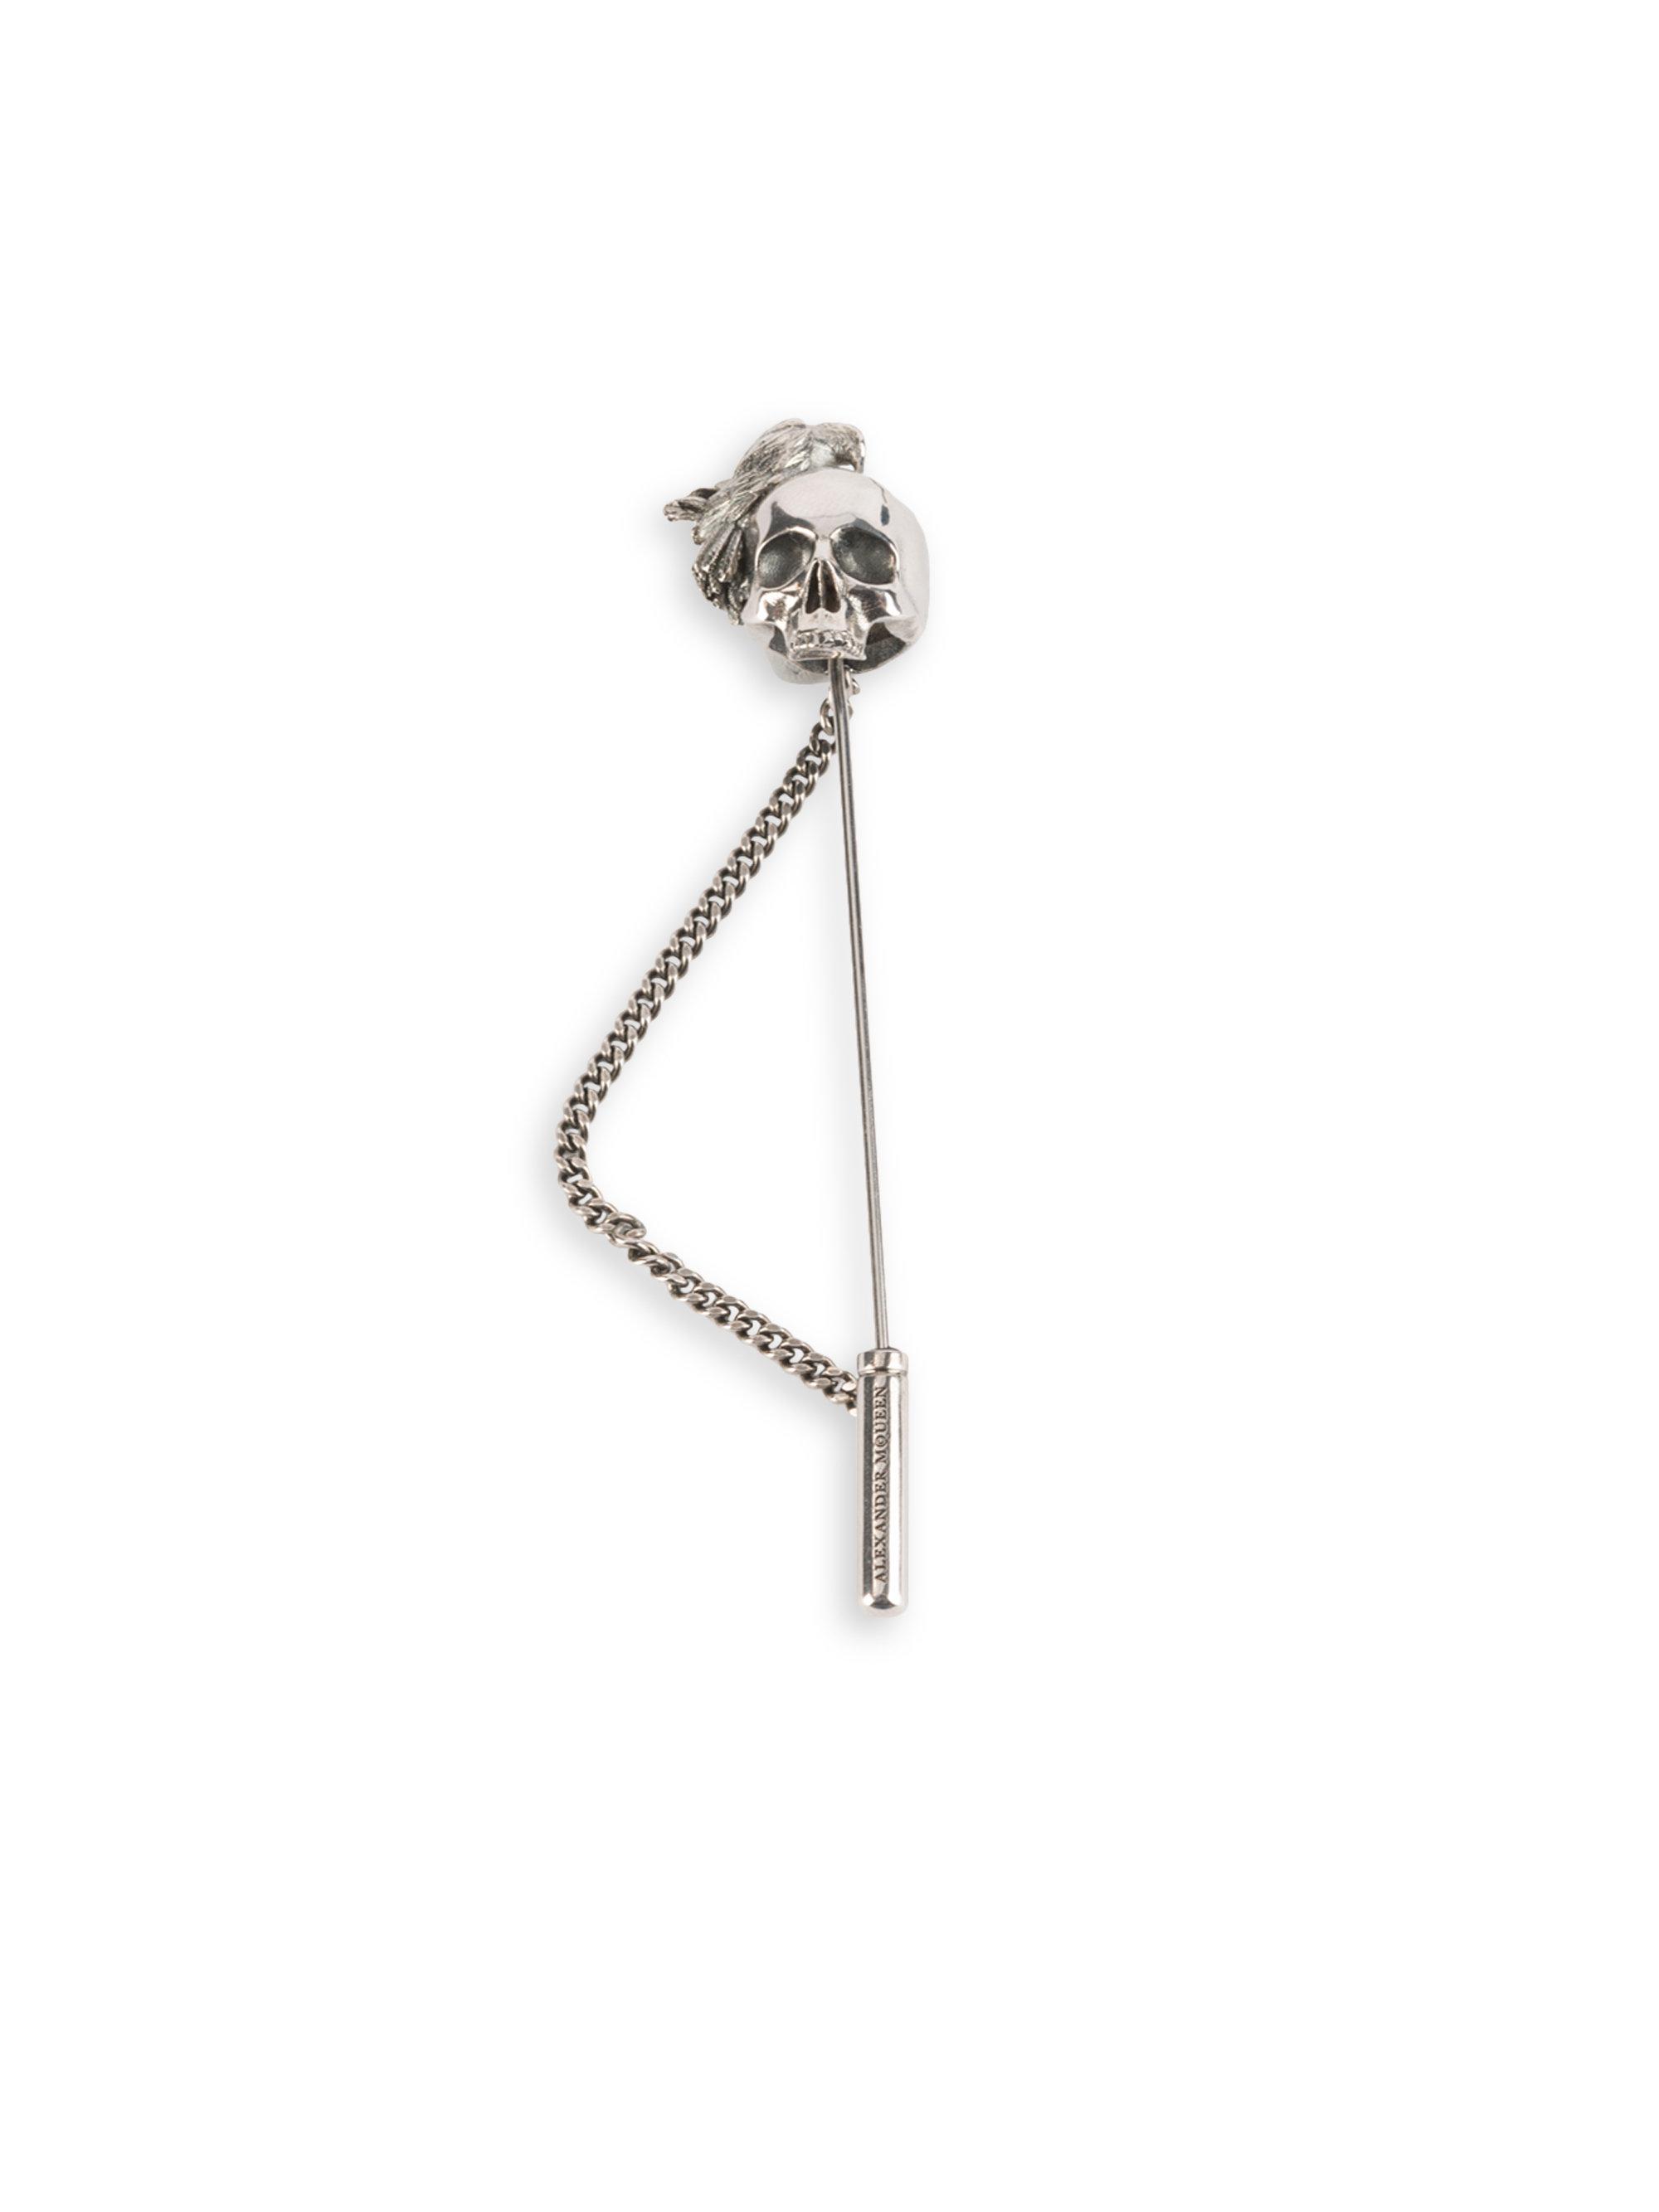 Lapel Pin in Antique Silver (Metallic 